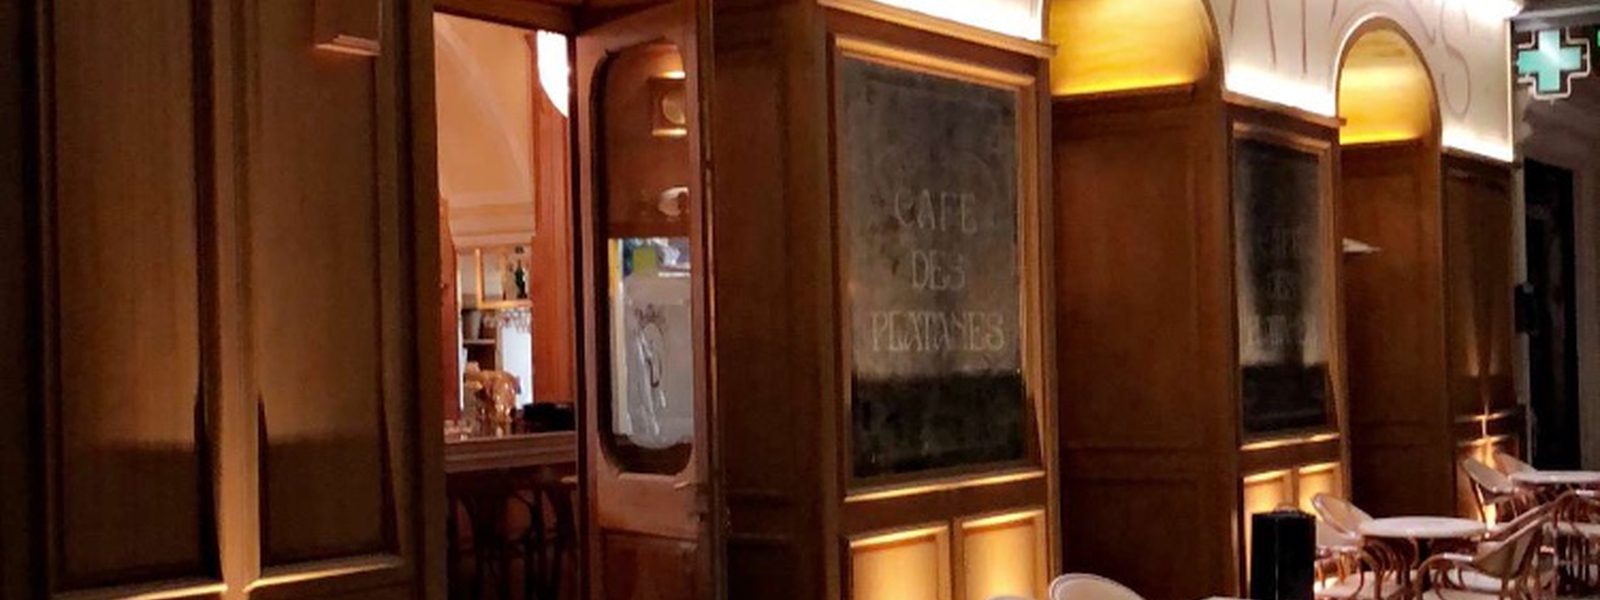 Café des Platanes image header